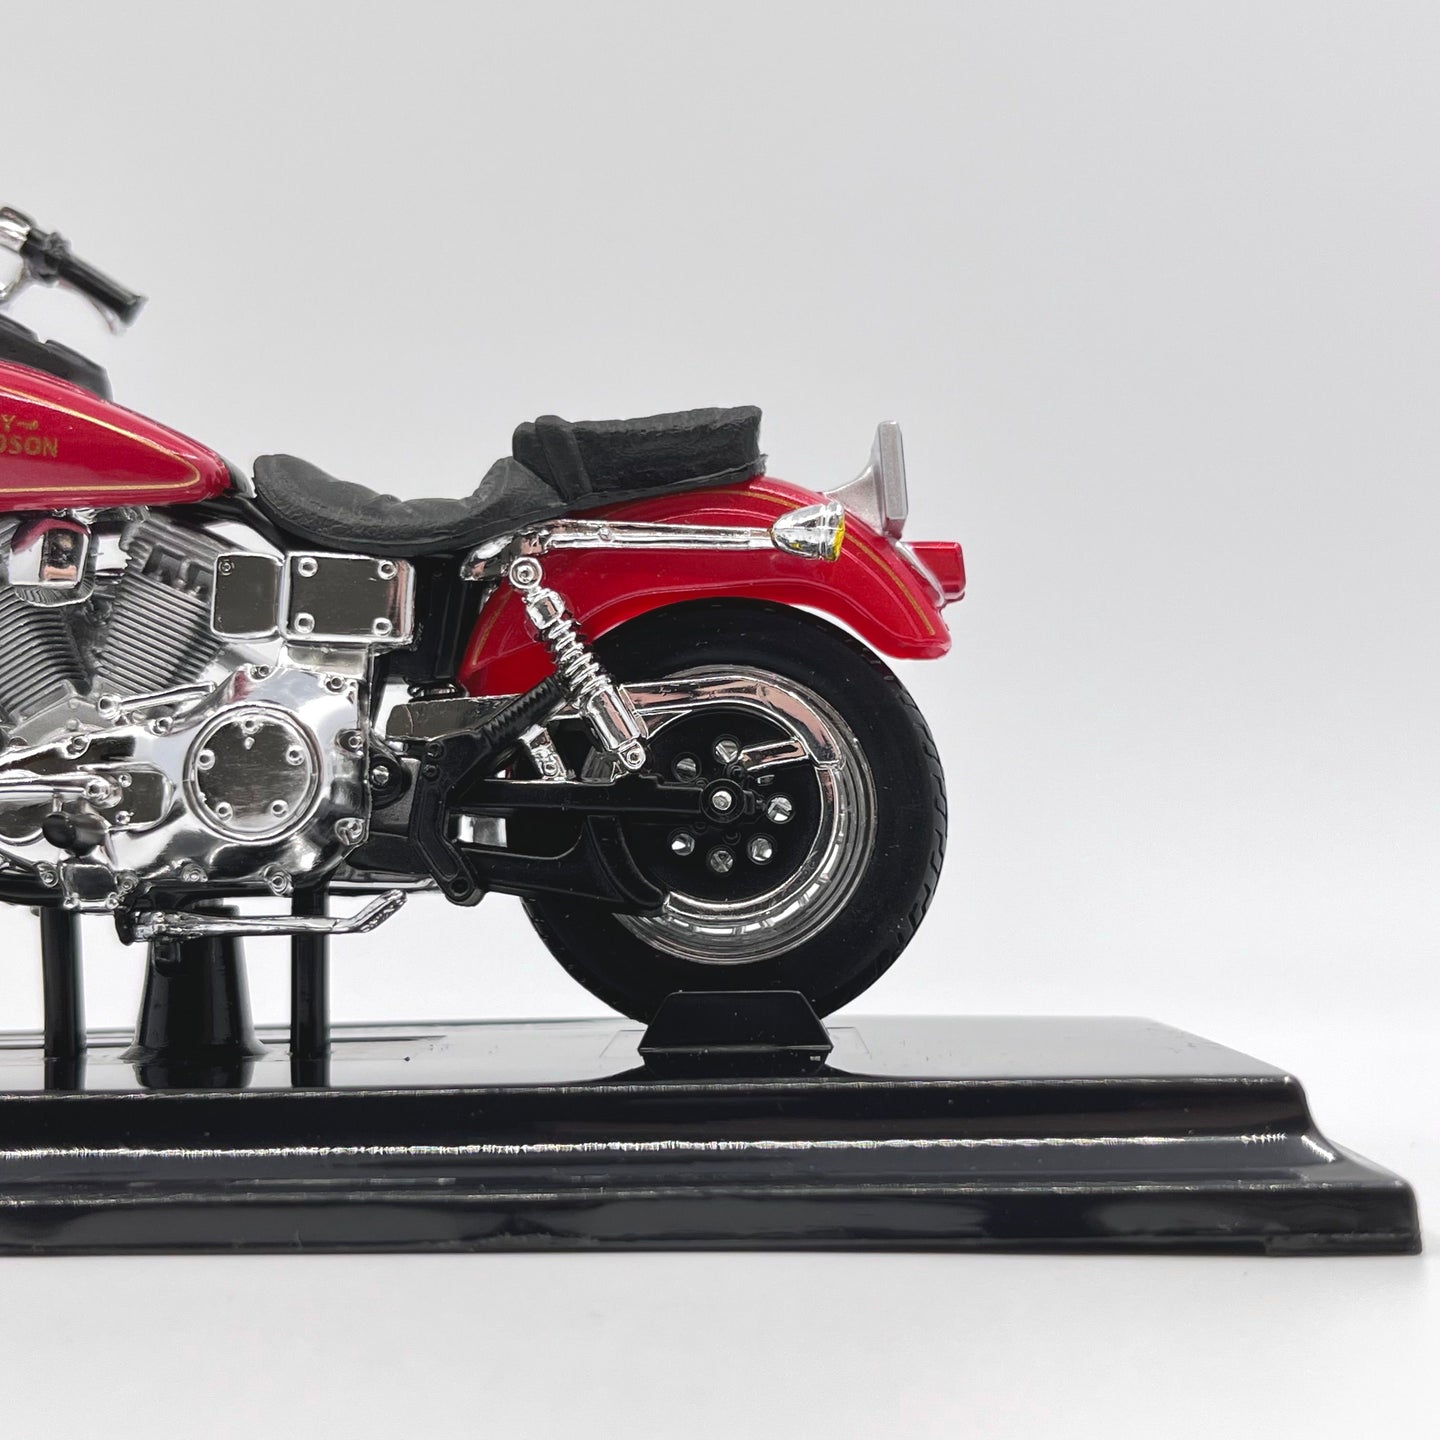 1997 Harley Davidson FXDL Dyna Low Rider 1:18 Diecast Bike Motorcycle Model By Maisto